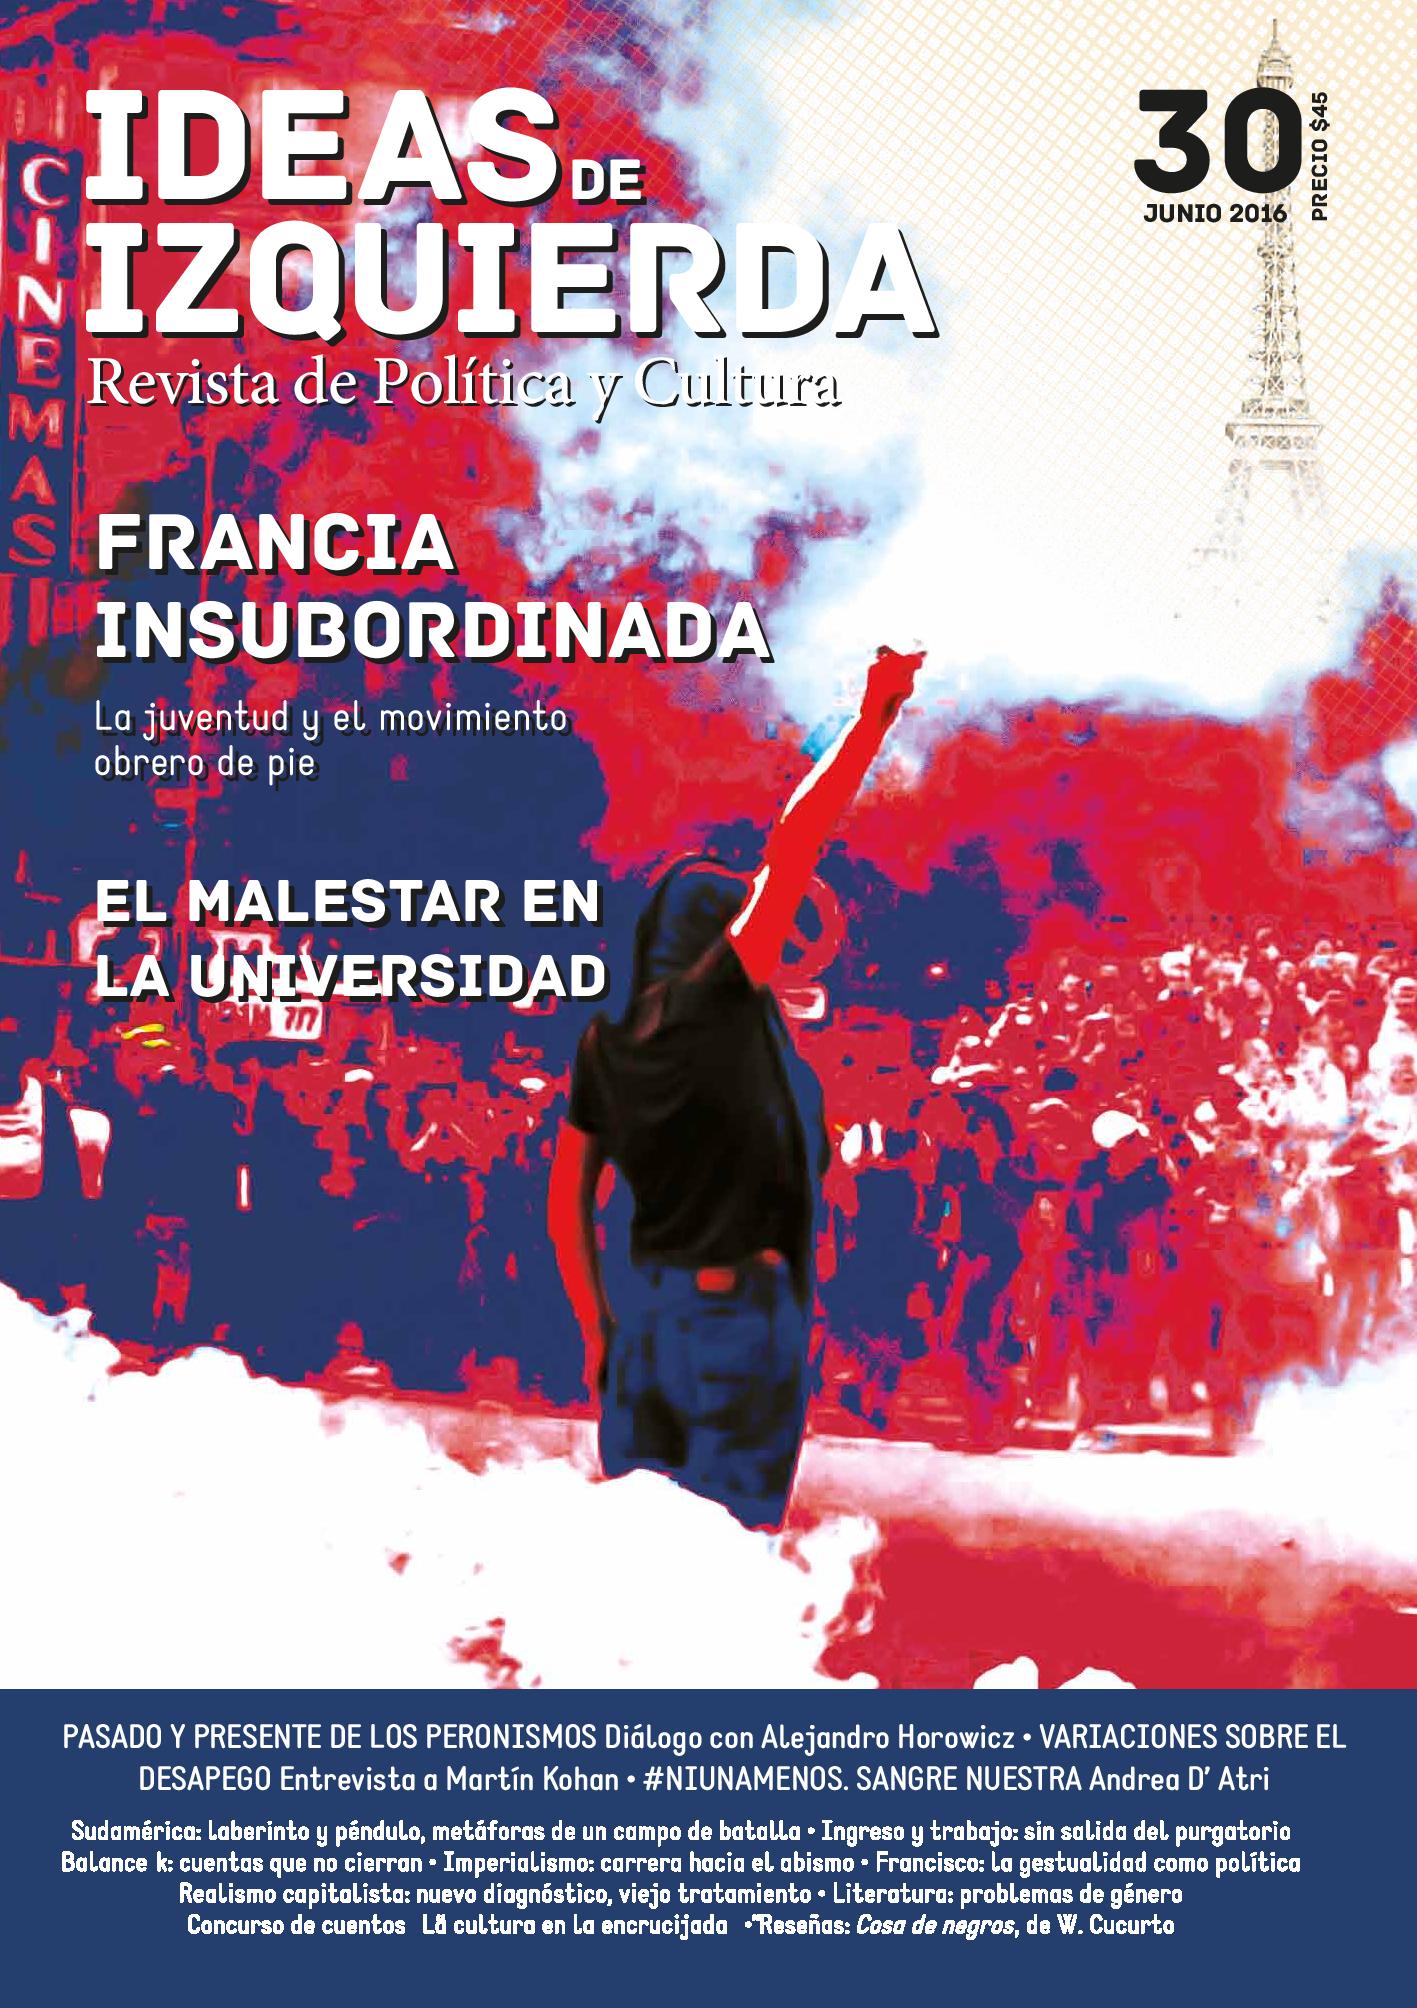 Ideas de izquierda - Argentina Juin 2016